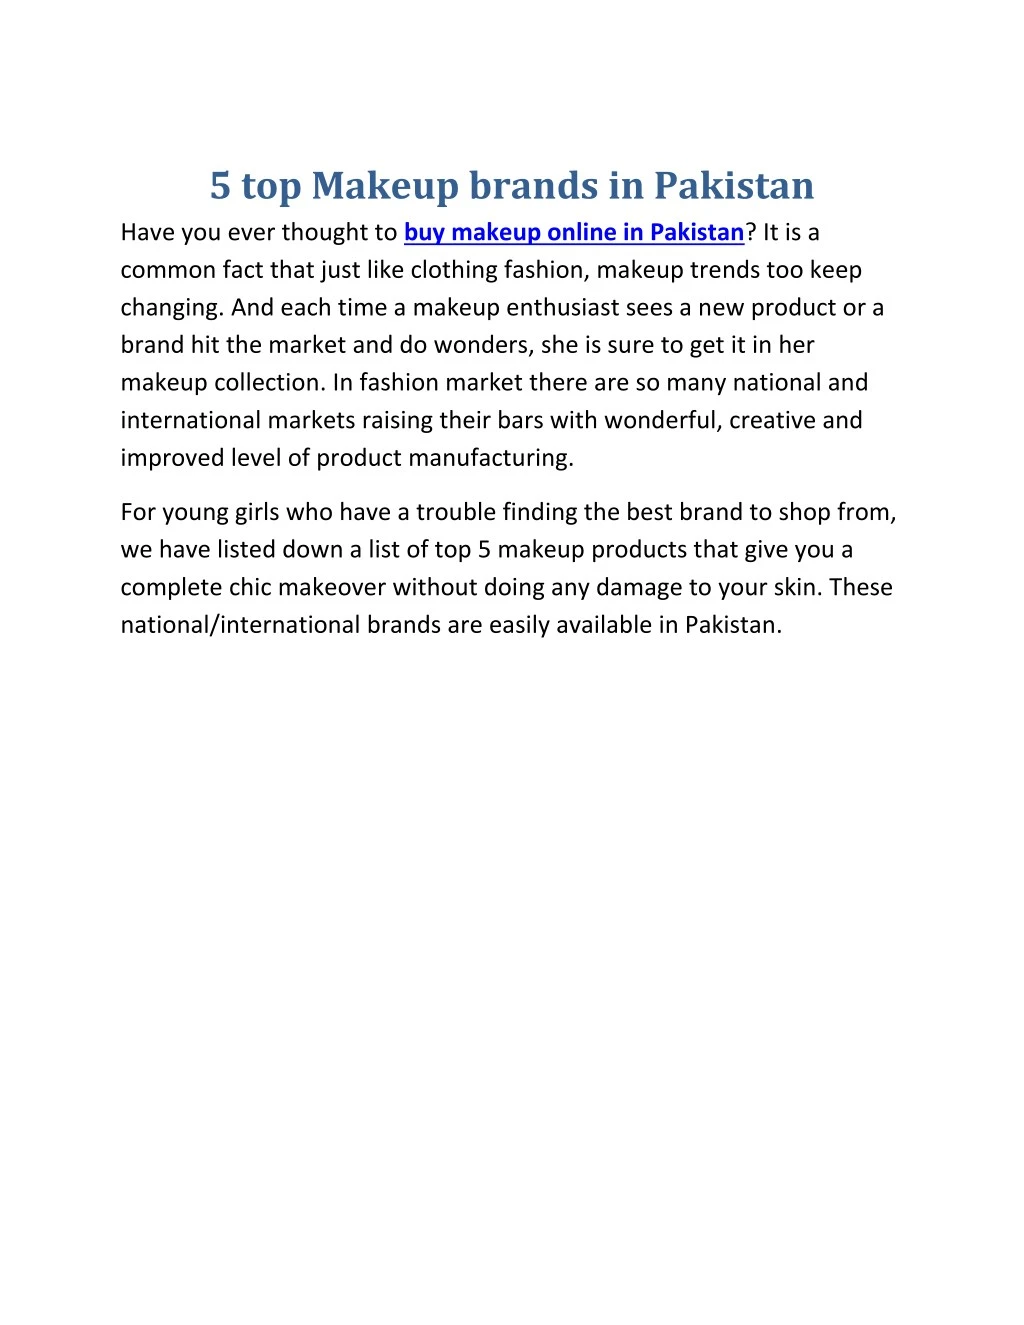 5 top makeup brands in pakistan have you ever